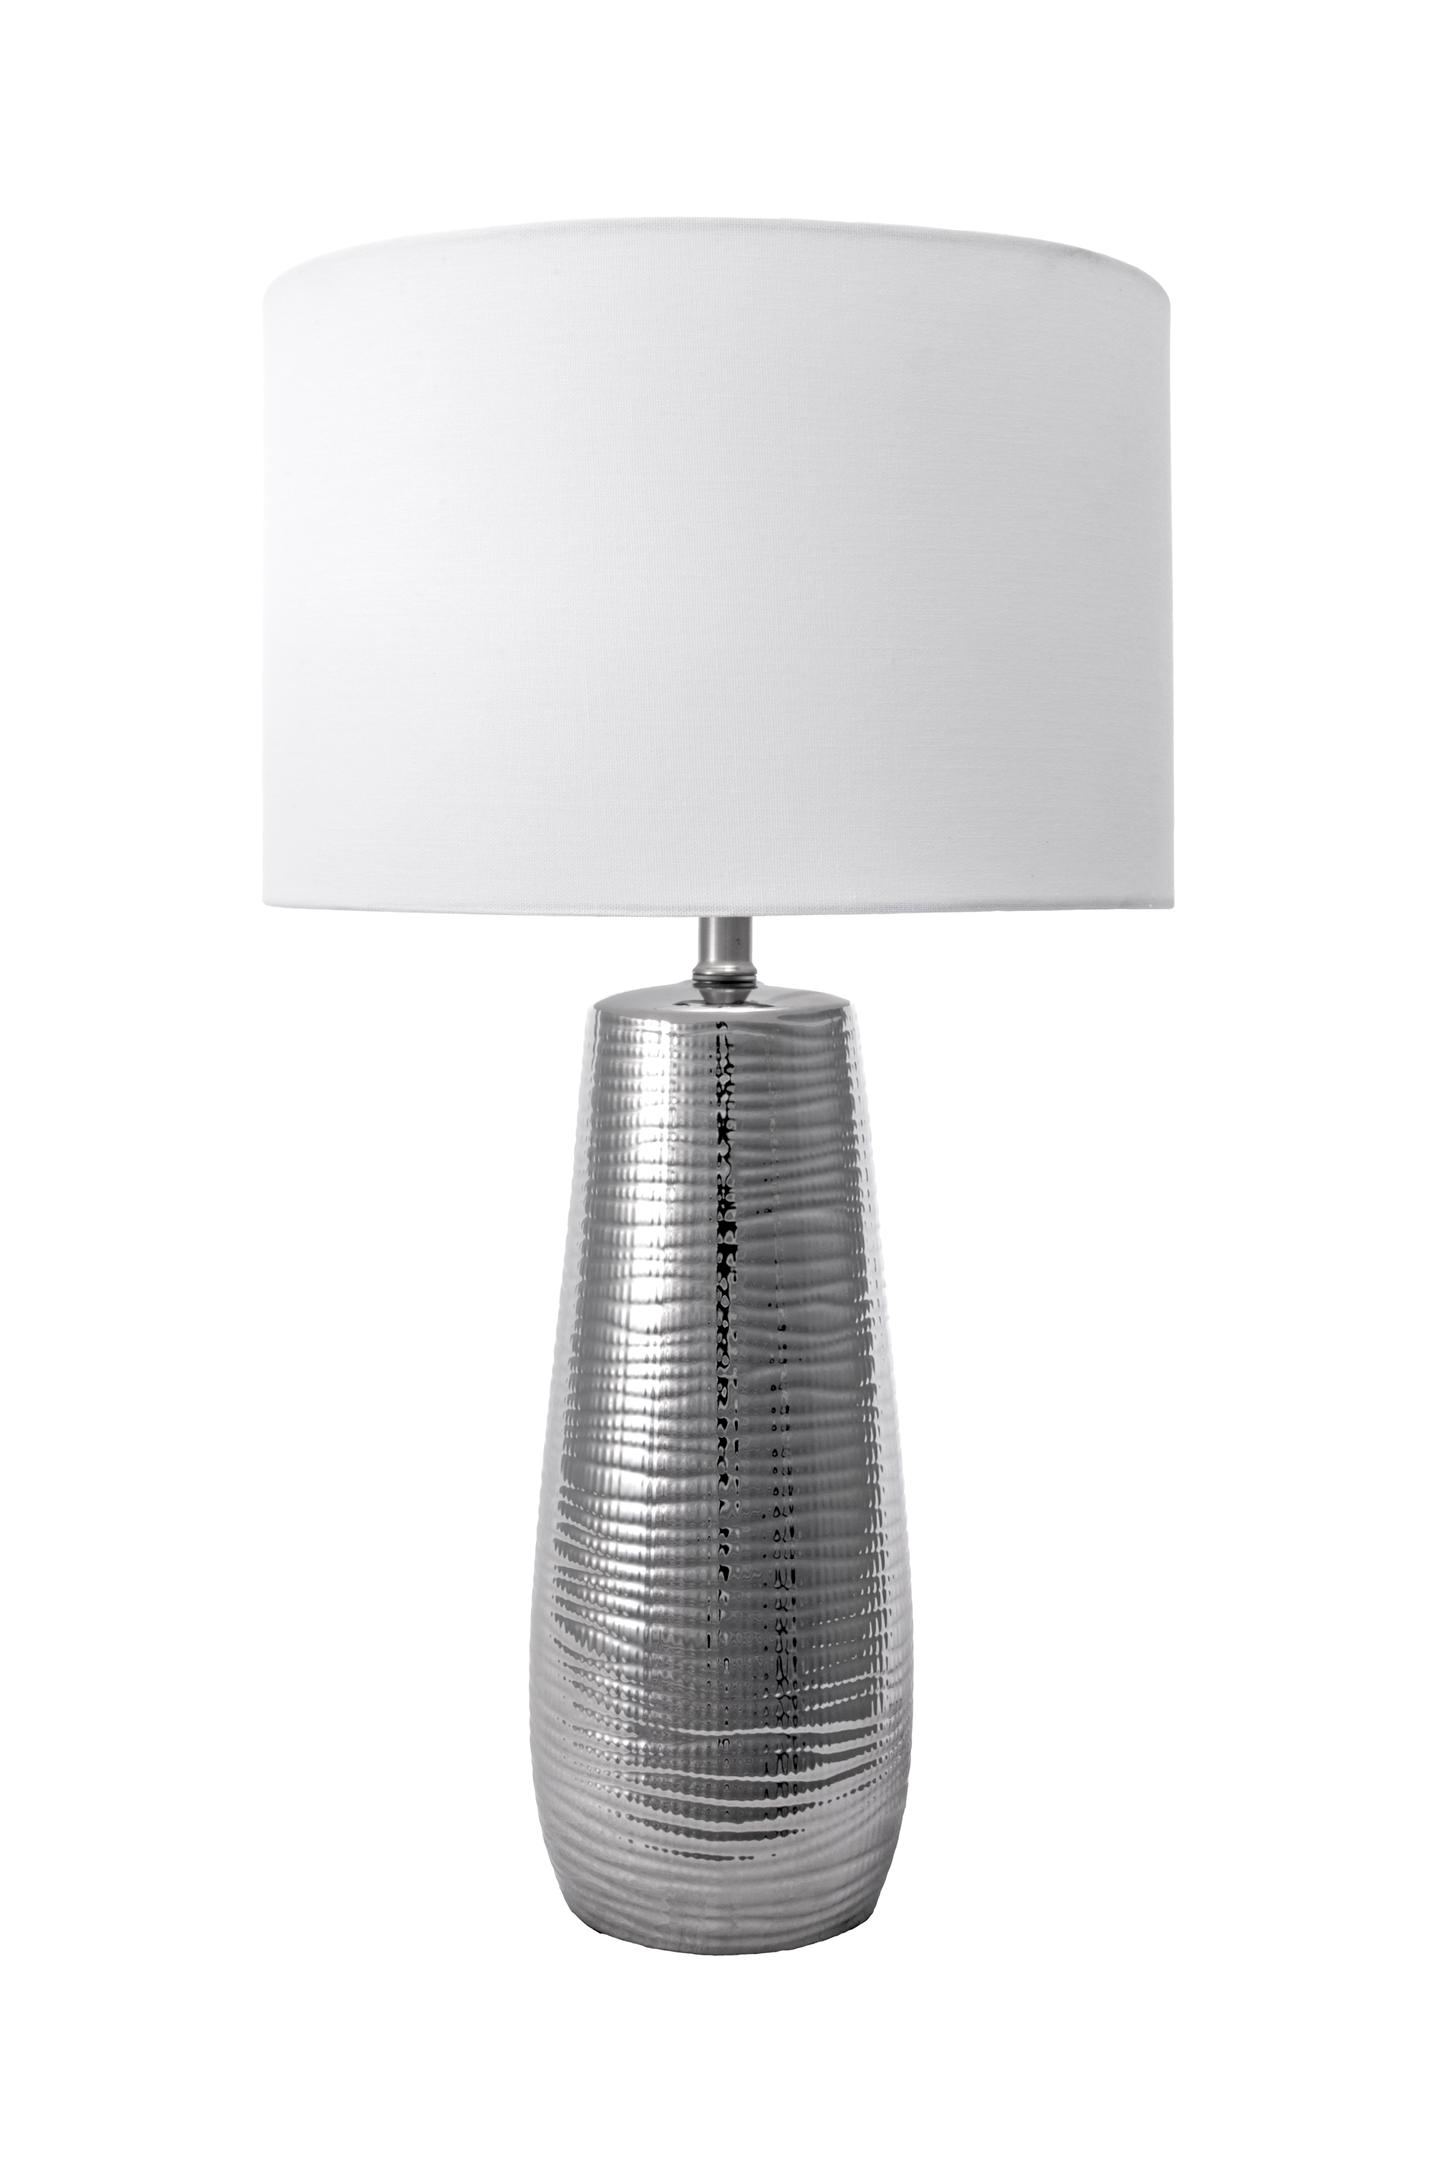  Memphis 26" Ceramic Table Lamp - Image 2